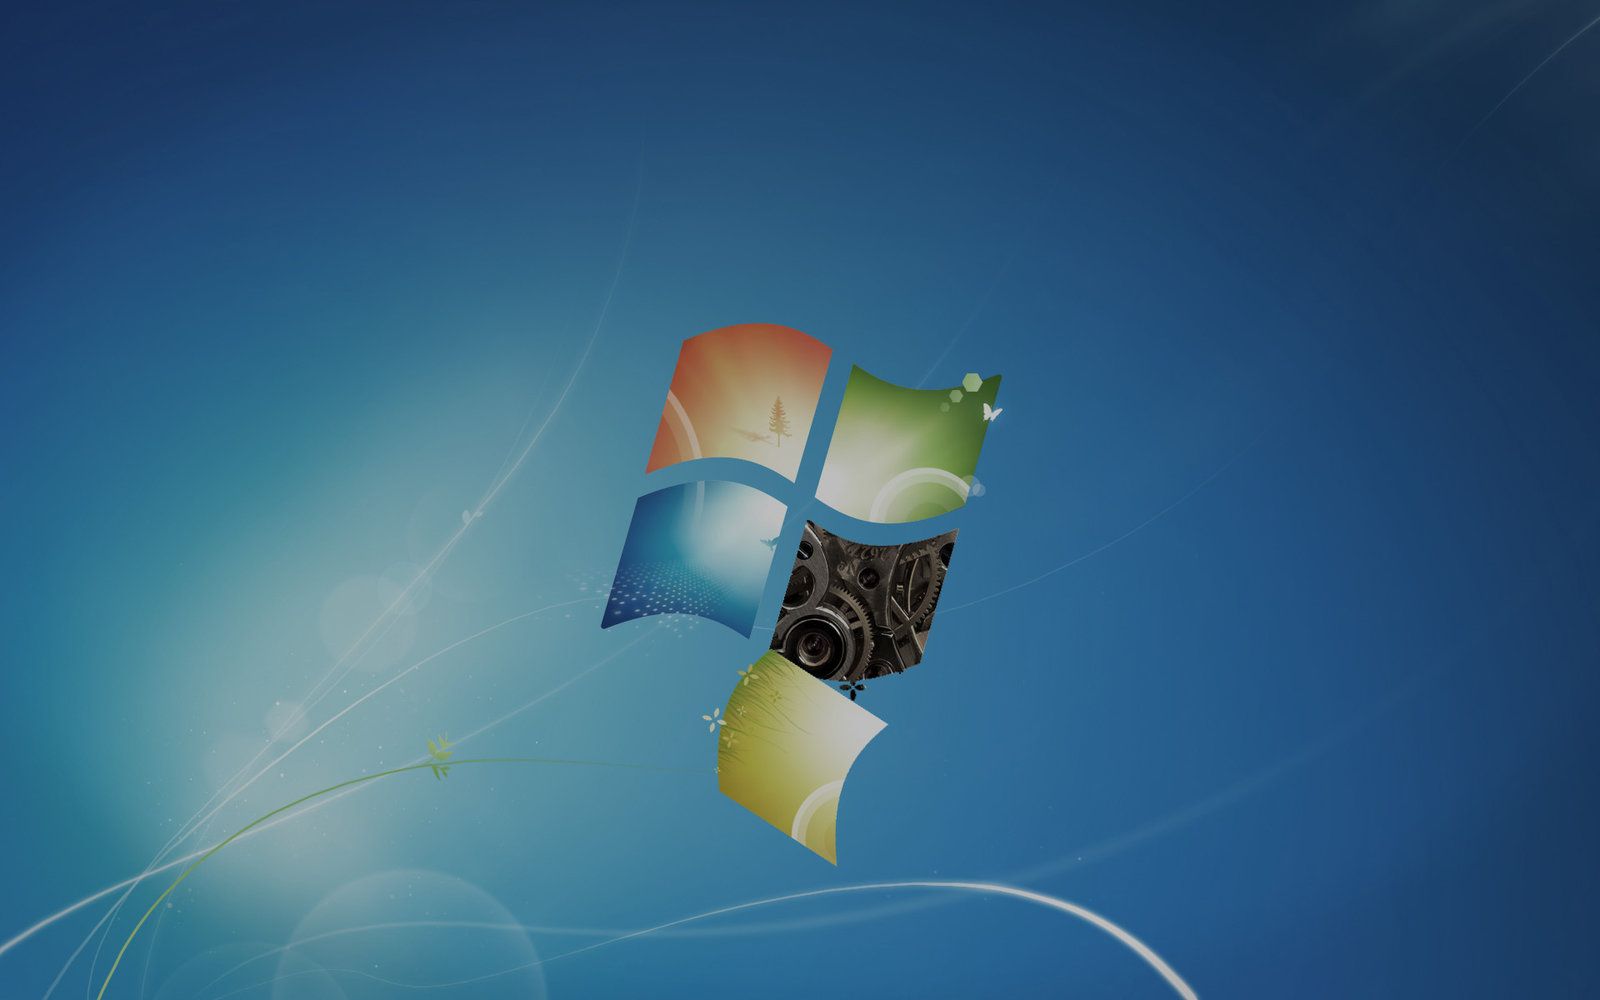 Badly) Aged Windows 7 default wallpaper by Derpy-Sheen on DeviantArt